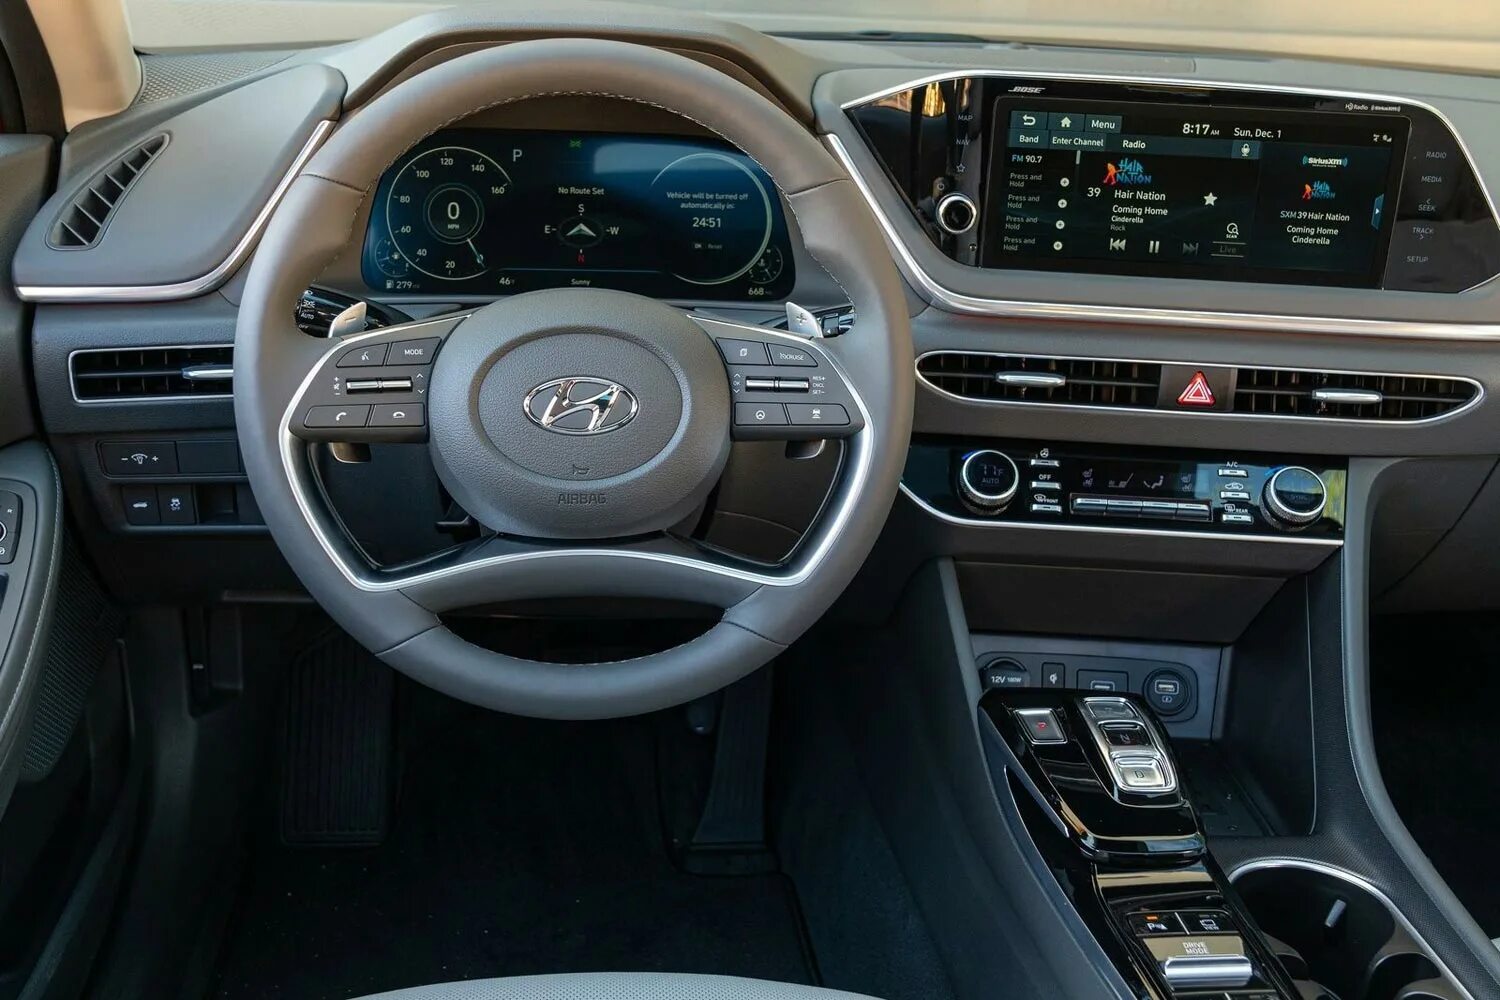 Hyundai Sonata 2020 Interior. Новая Hyundai Sonata 2020. Hyundai Sonata 2020 салон. Хендай Соната 2020 интерьер. Новая хендай соната цена и комплектация